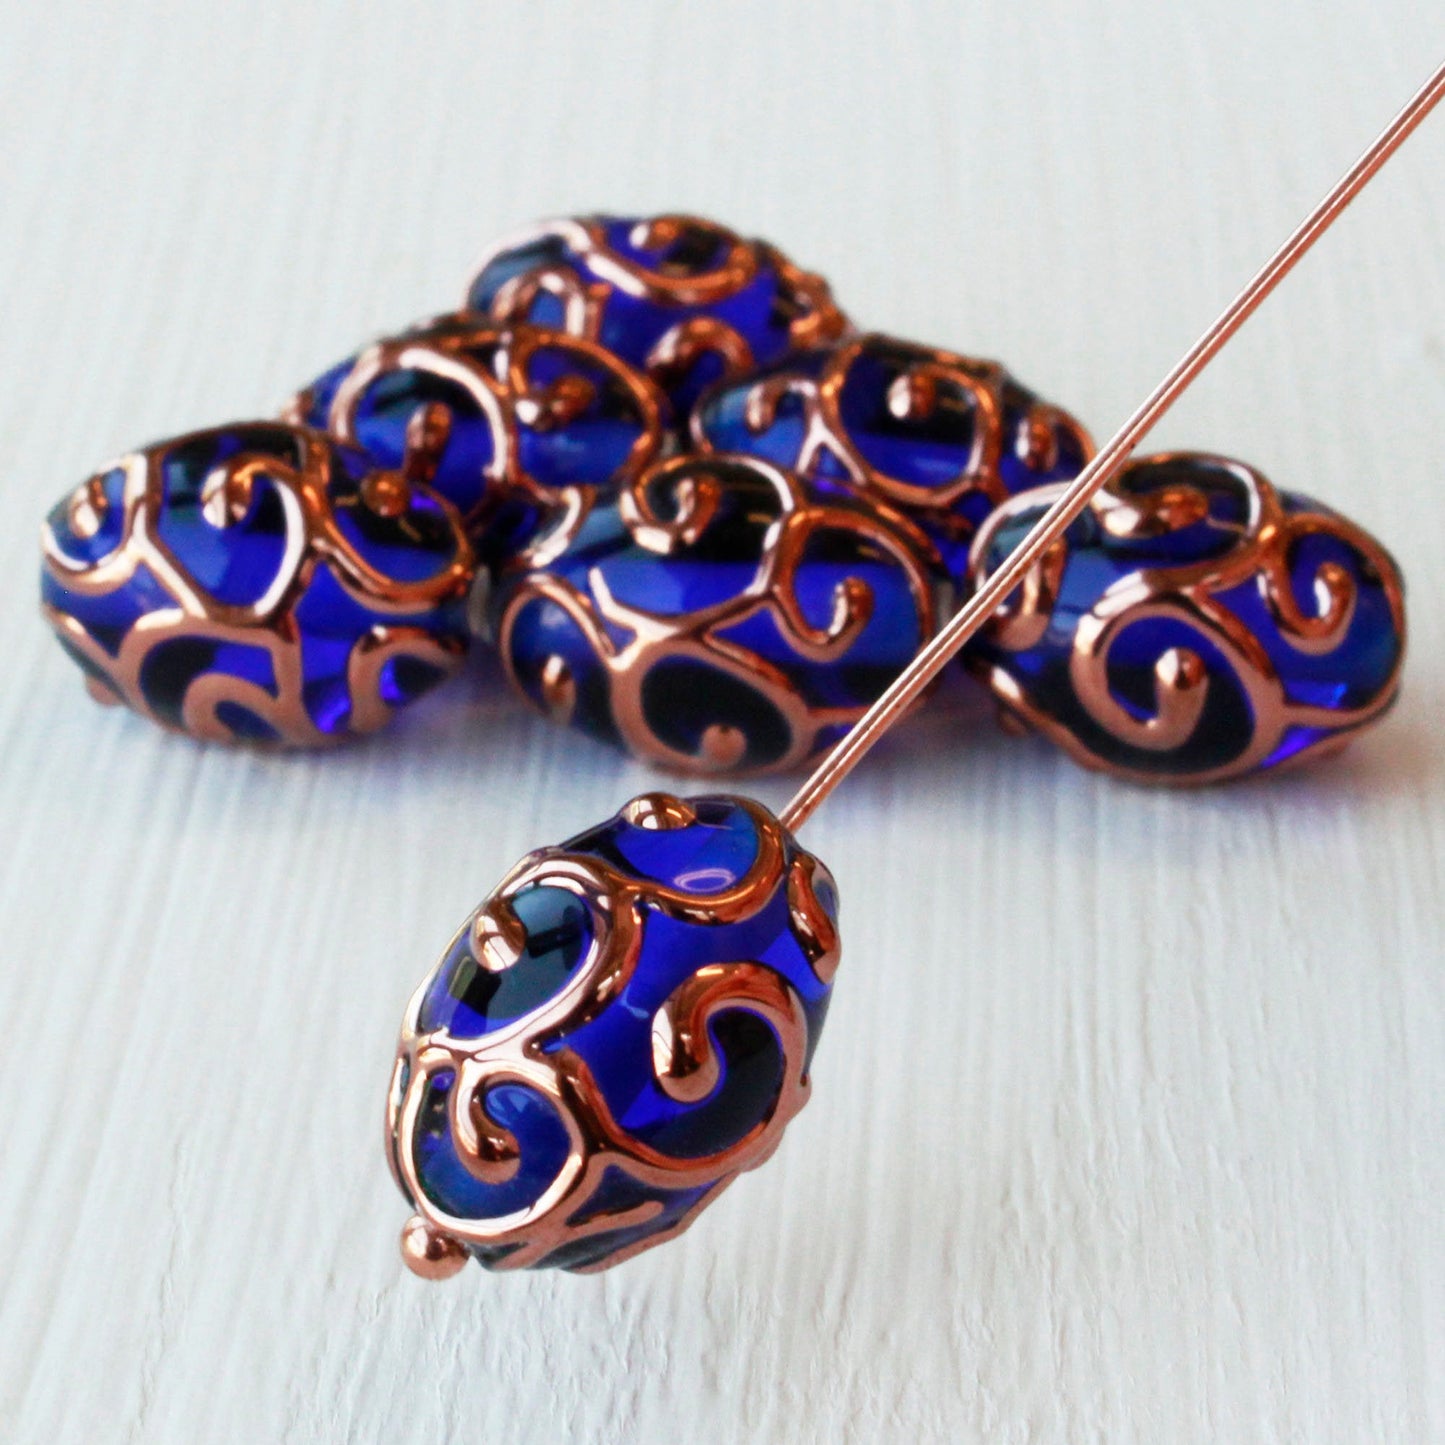 15x10mm Handmade Lampwork Beads - Cobalt - 2,4 or 8